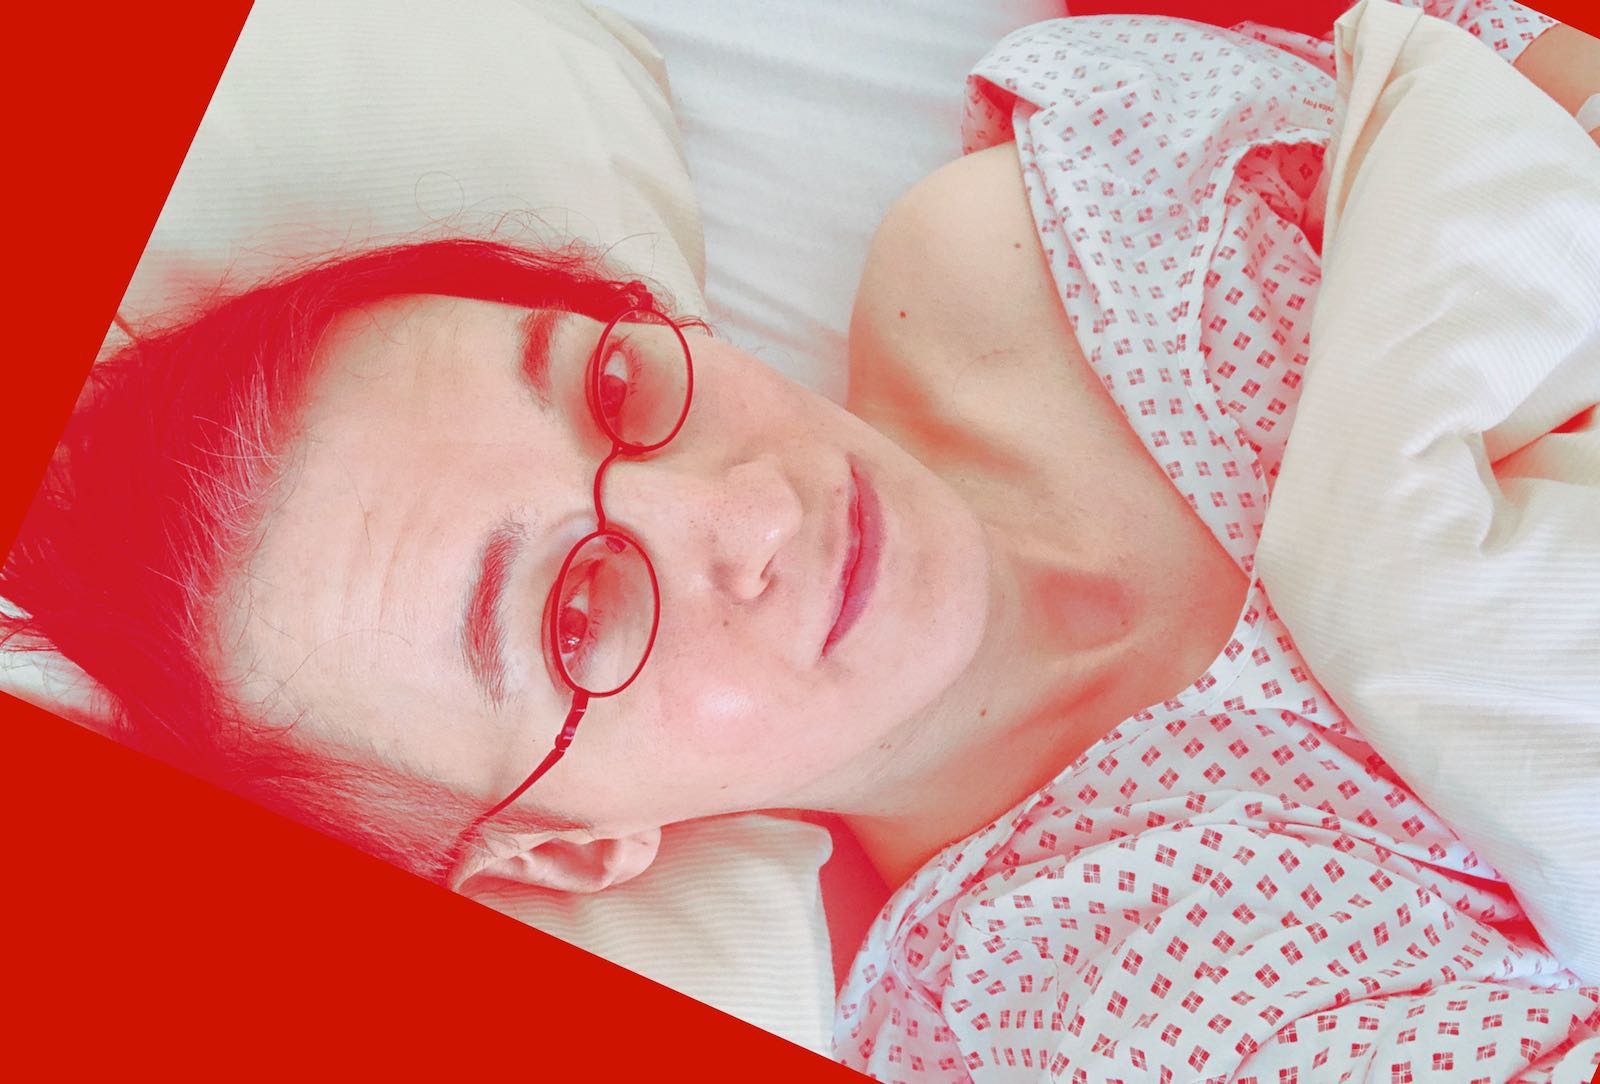 Selfie, lying in a hospital bed